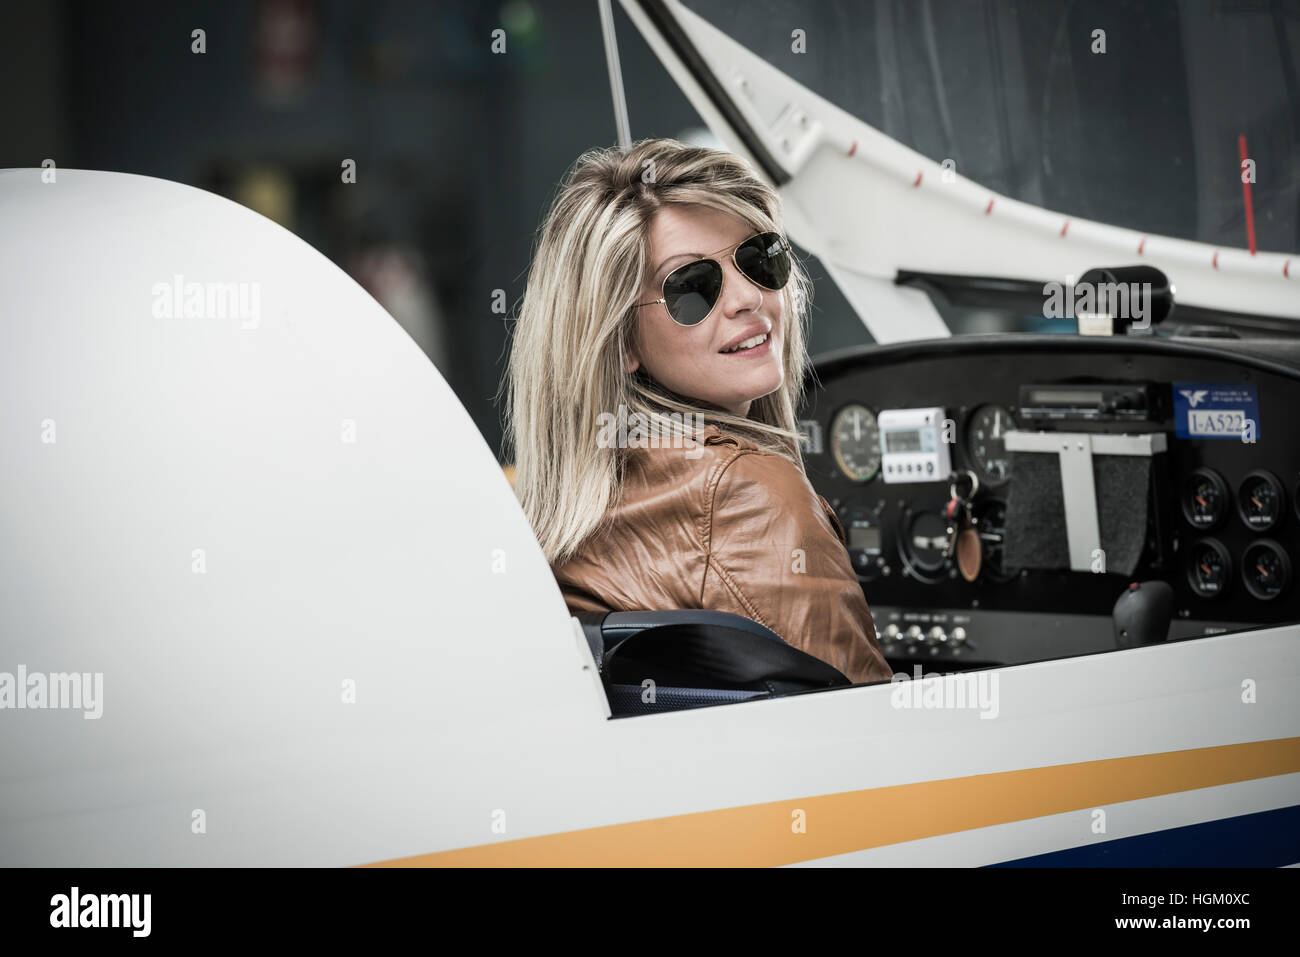 Female pilot inside airplane cockpit Stock Photo